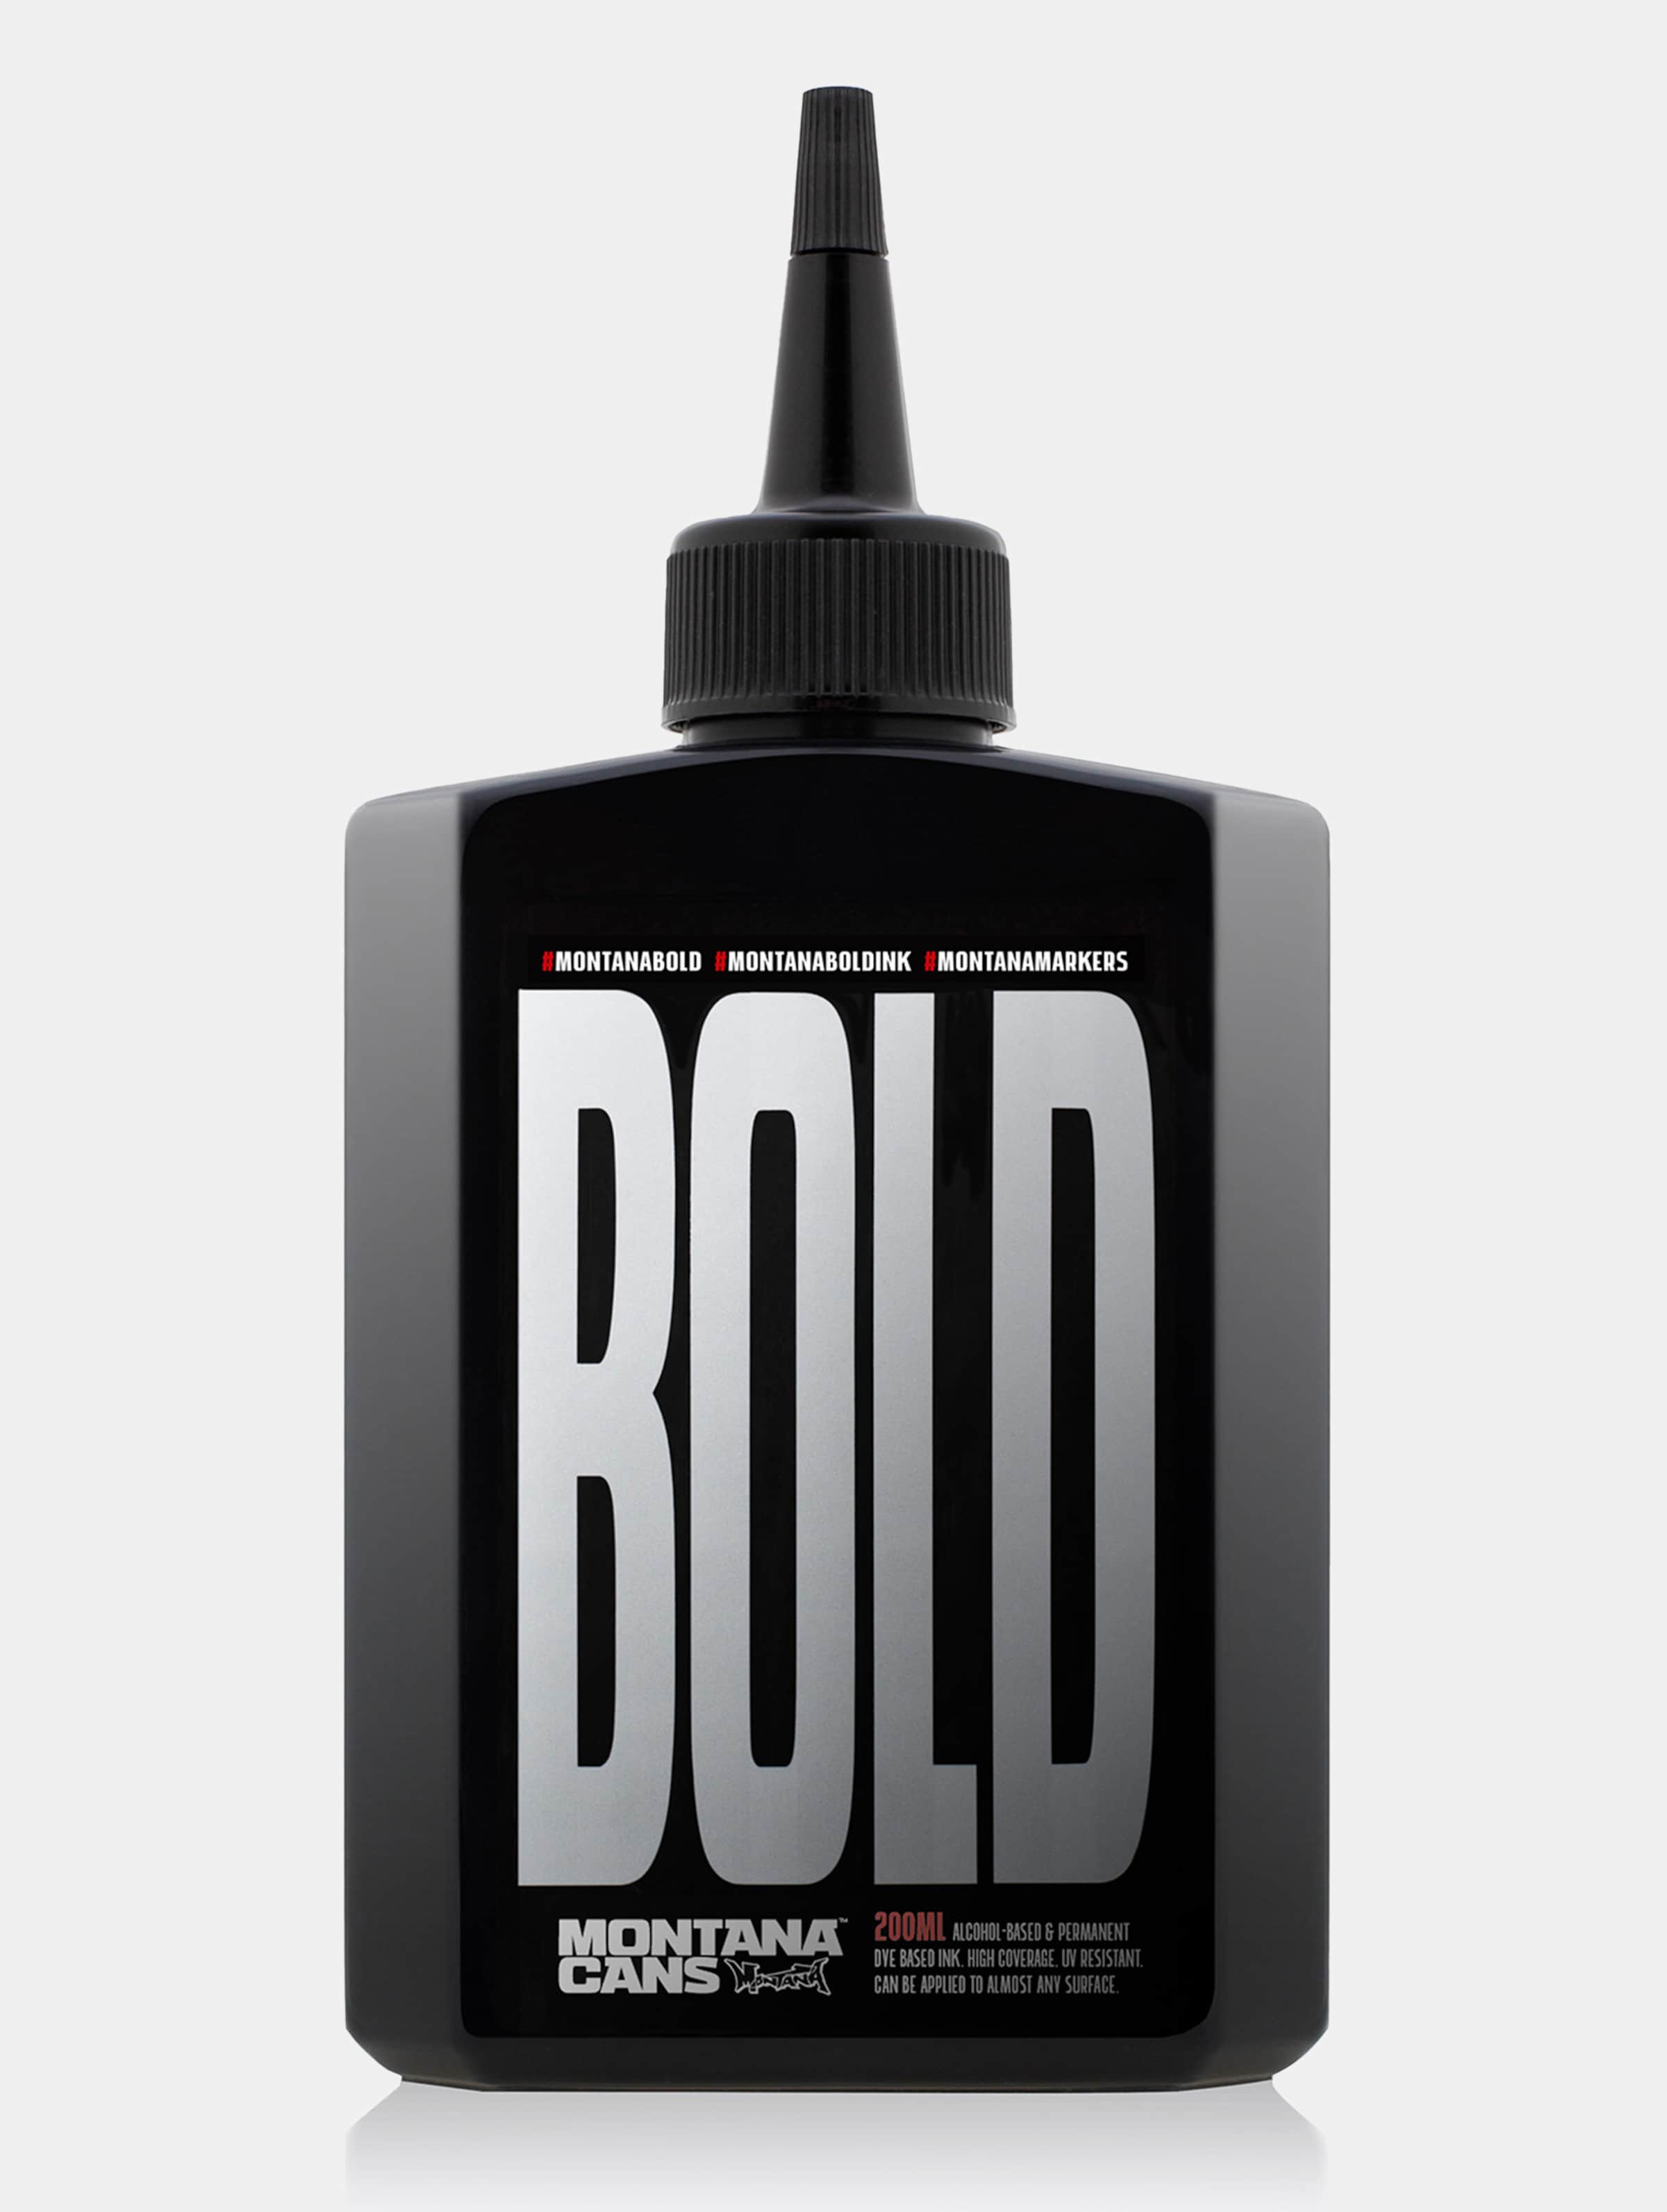 Montana Bold Zwarte Navul Inkt - 200ml permanente inkt is op alcohol basis